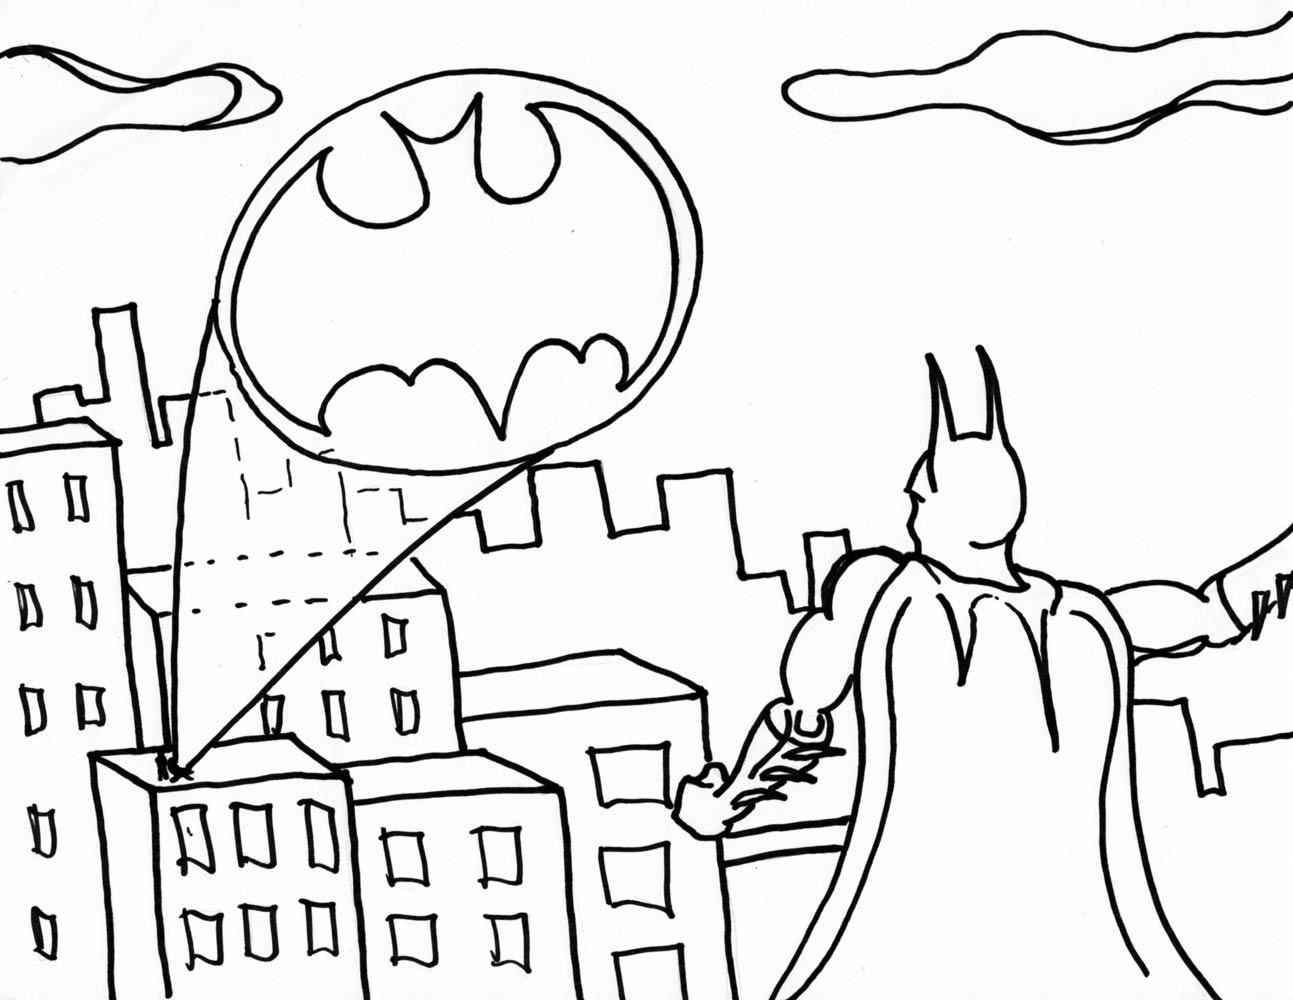 Bat Signal Coloring Page at GetColorings.com | Free printable colorings